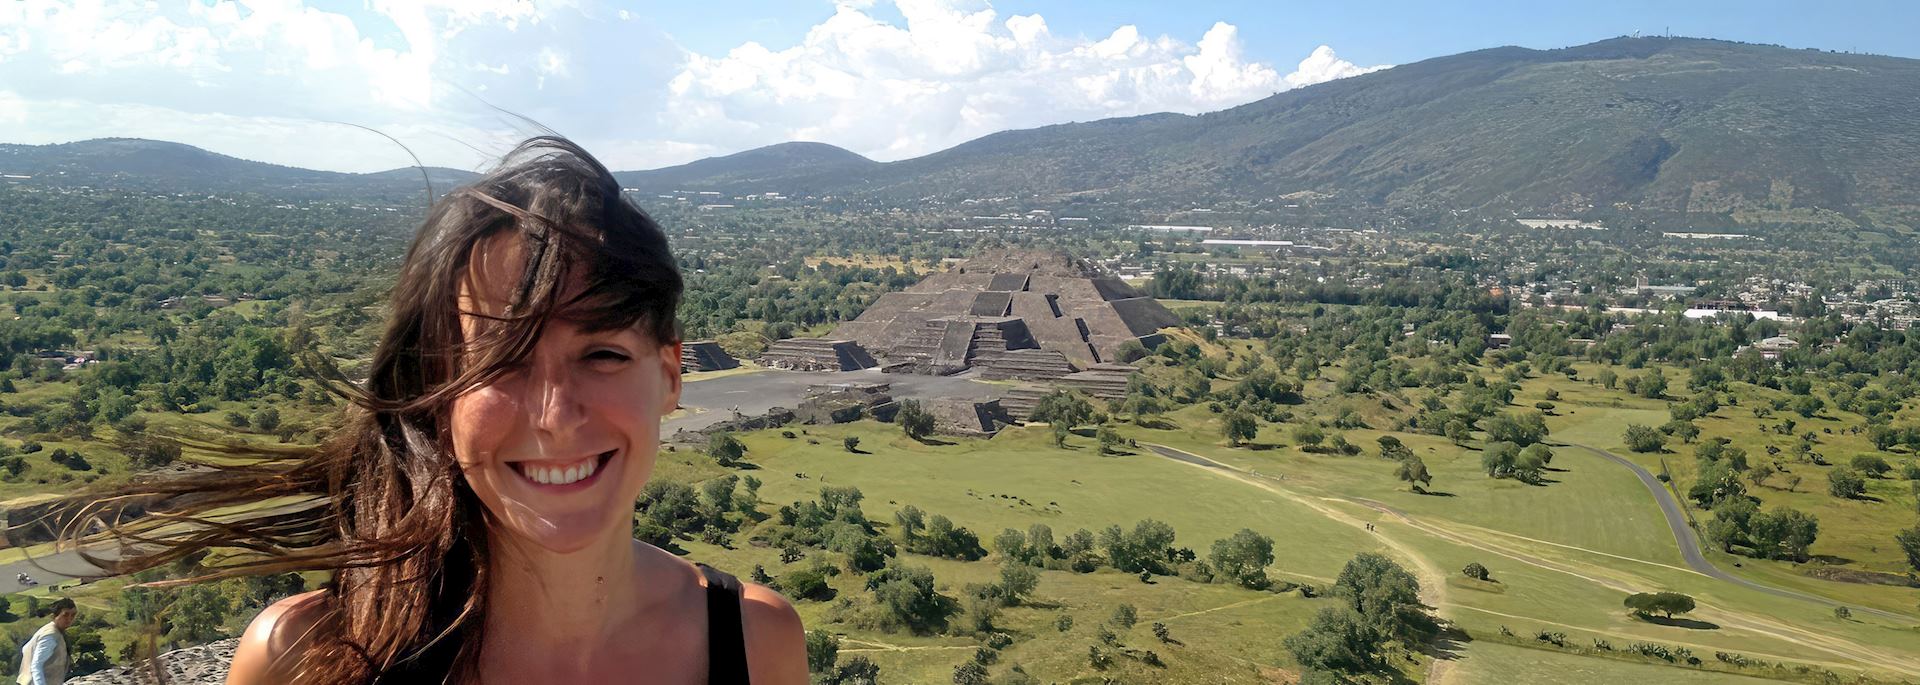 Ella at the Pyramids of Teotihuacan near Mexico City